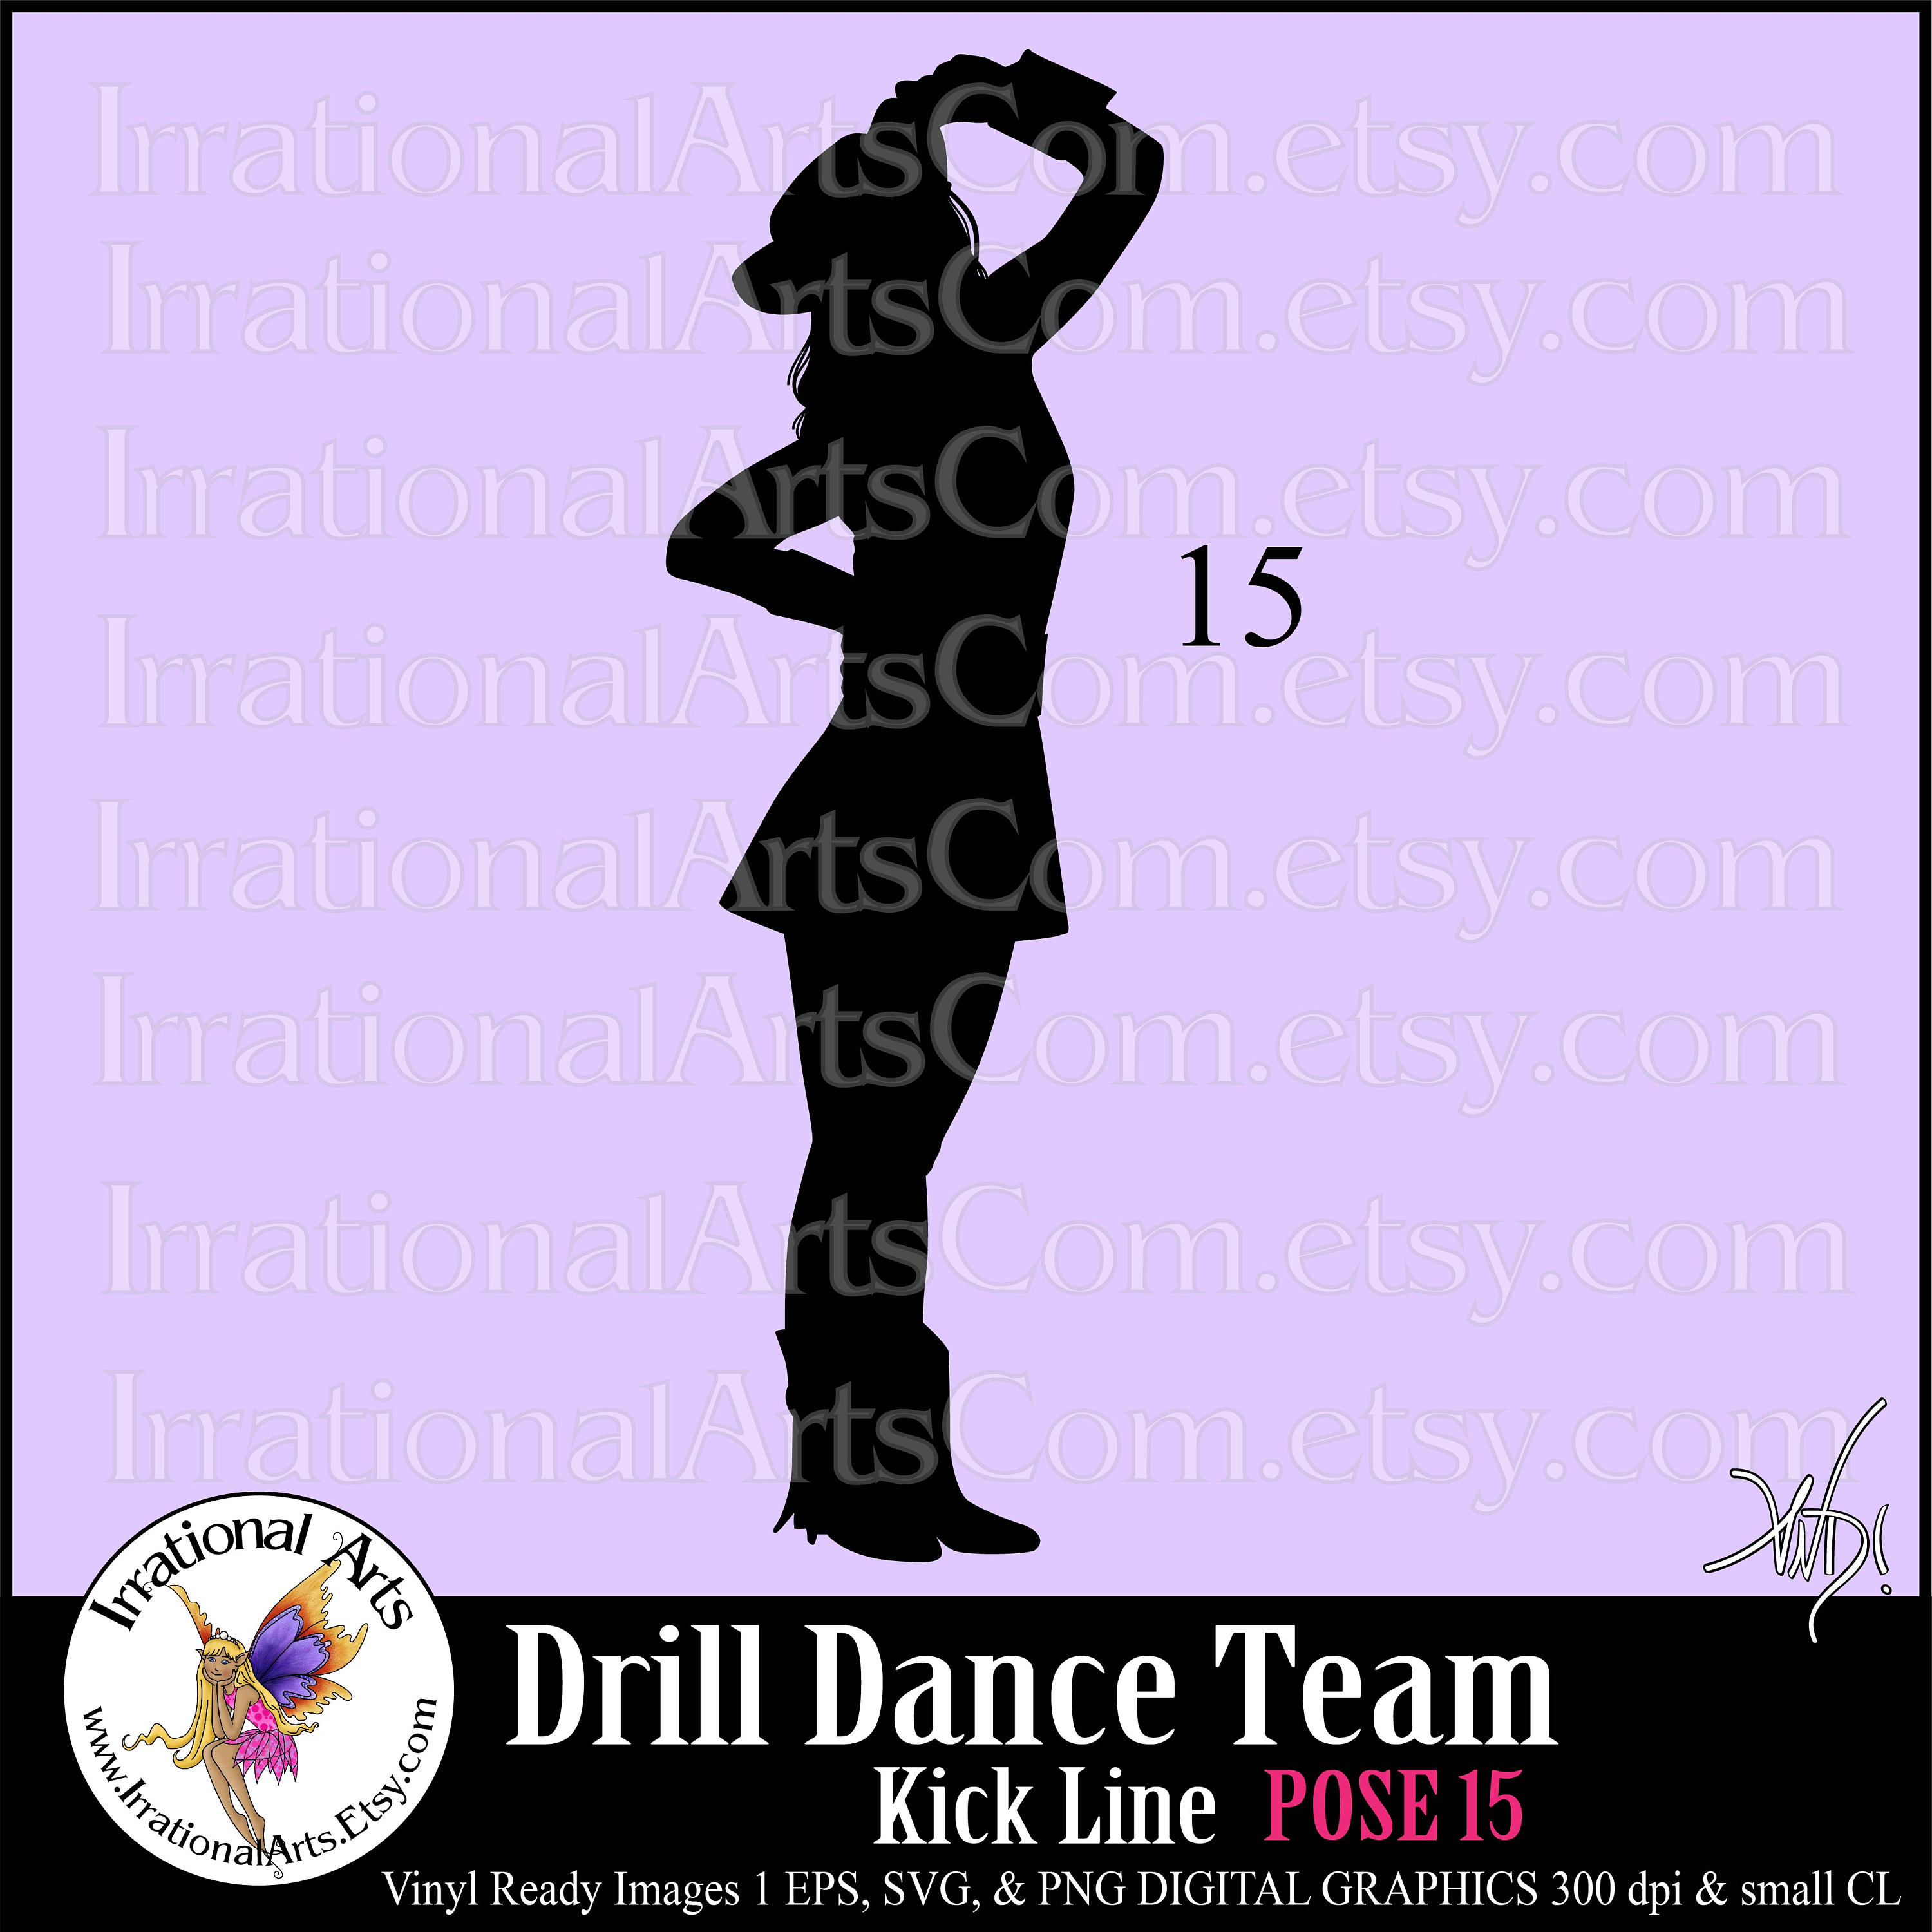 Drill Dance Team Silhouettes 